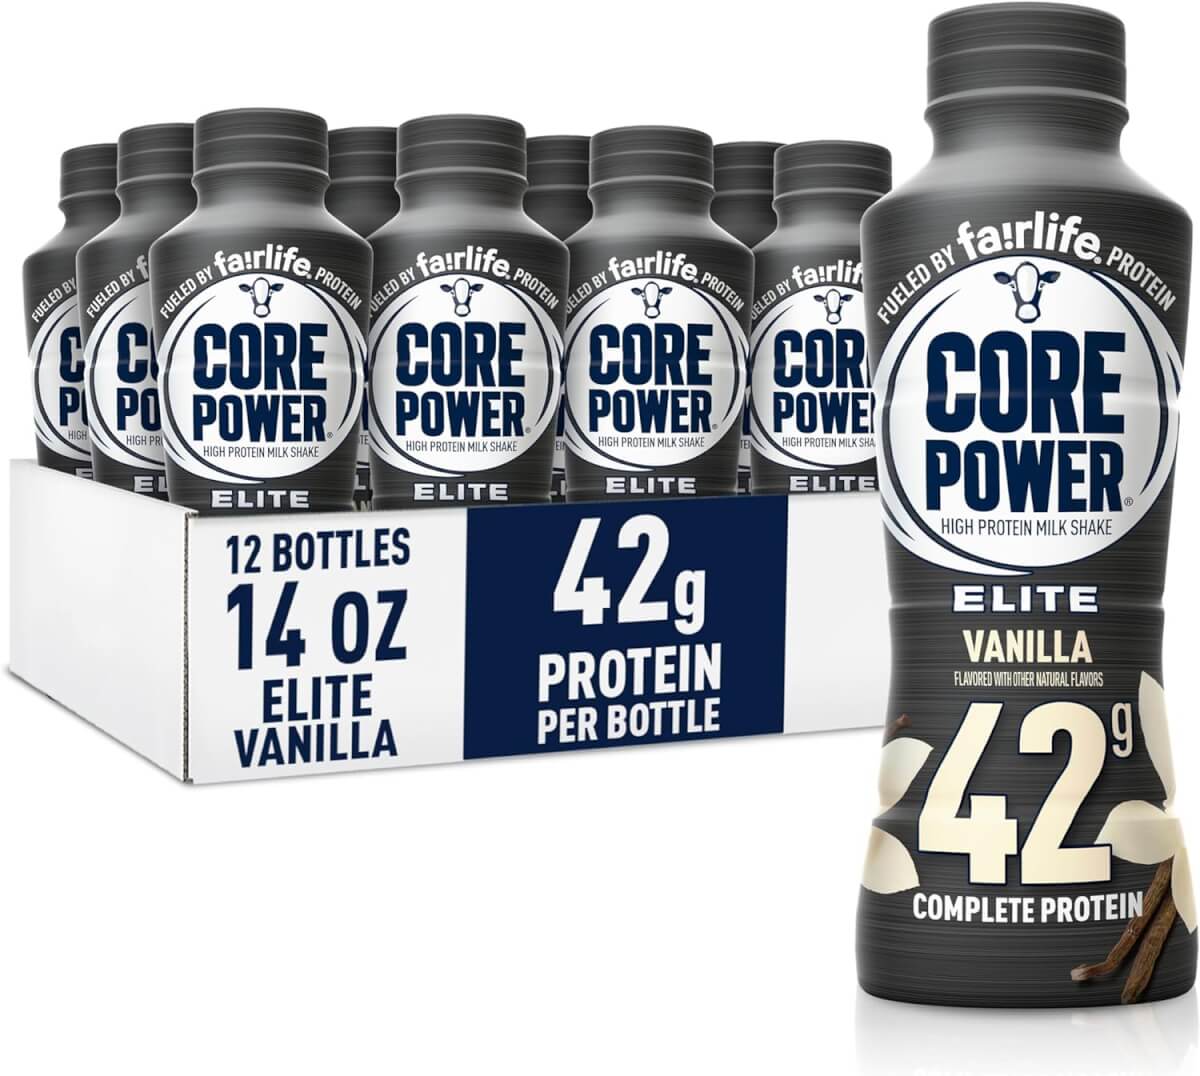 Core Power Fairlife Elite Vanilla Shake